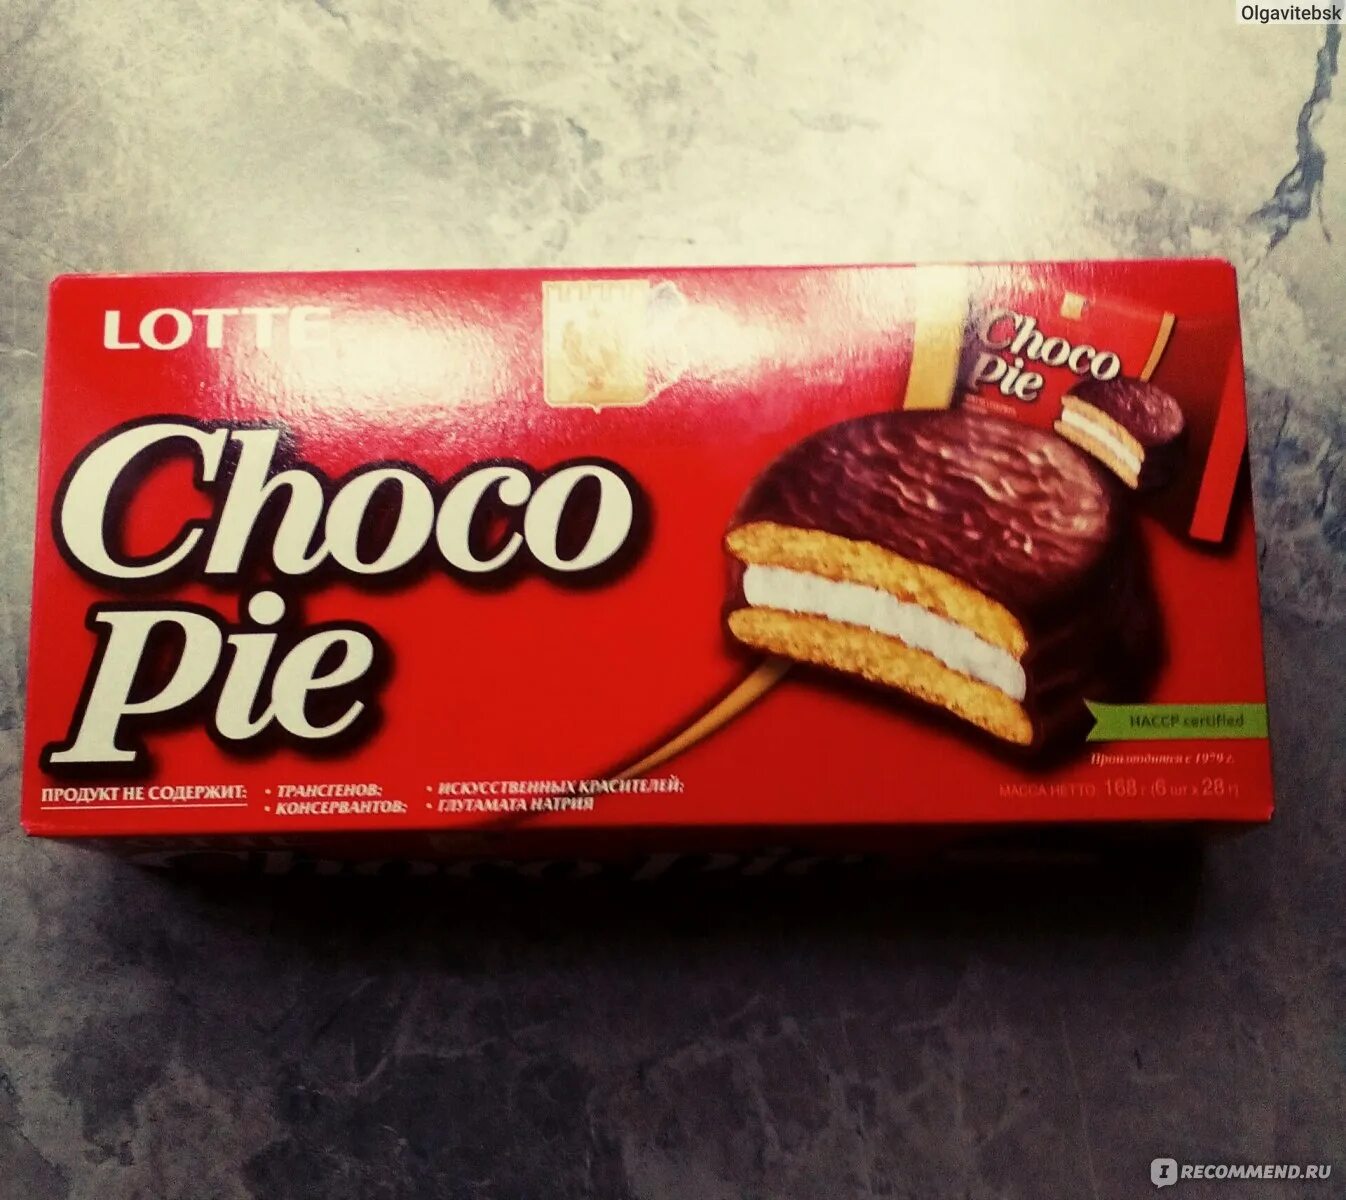 Бел пай. Чоко Пай Лотте. Lotte печенье. Lotte Choco pie бренд. Чоко Пай 4.